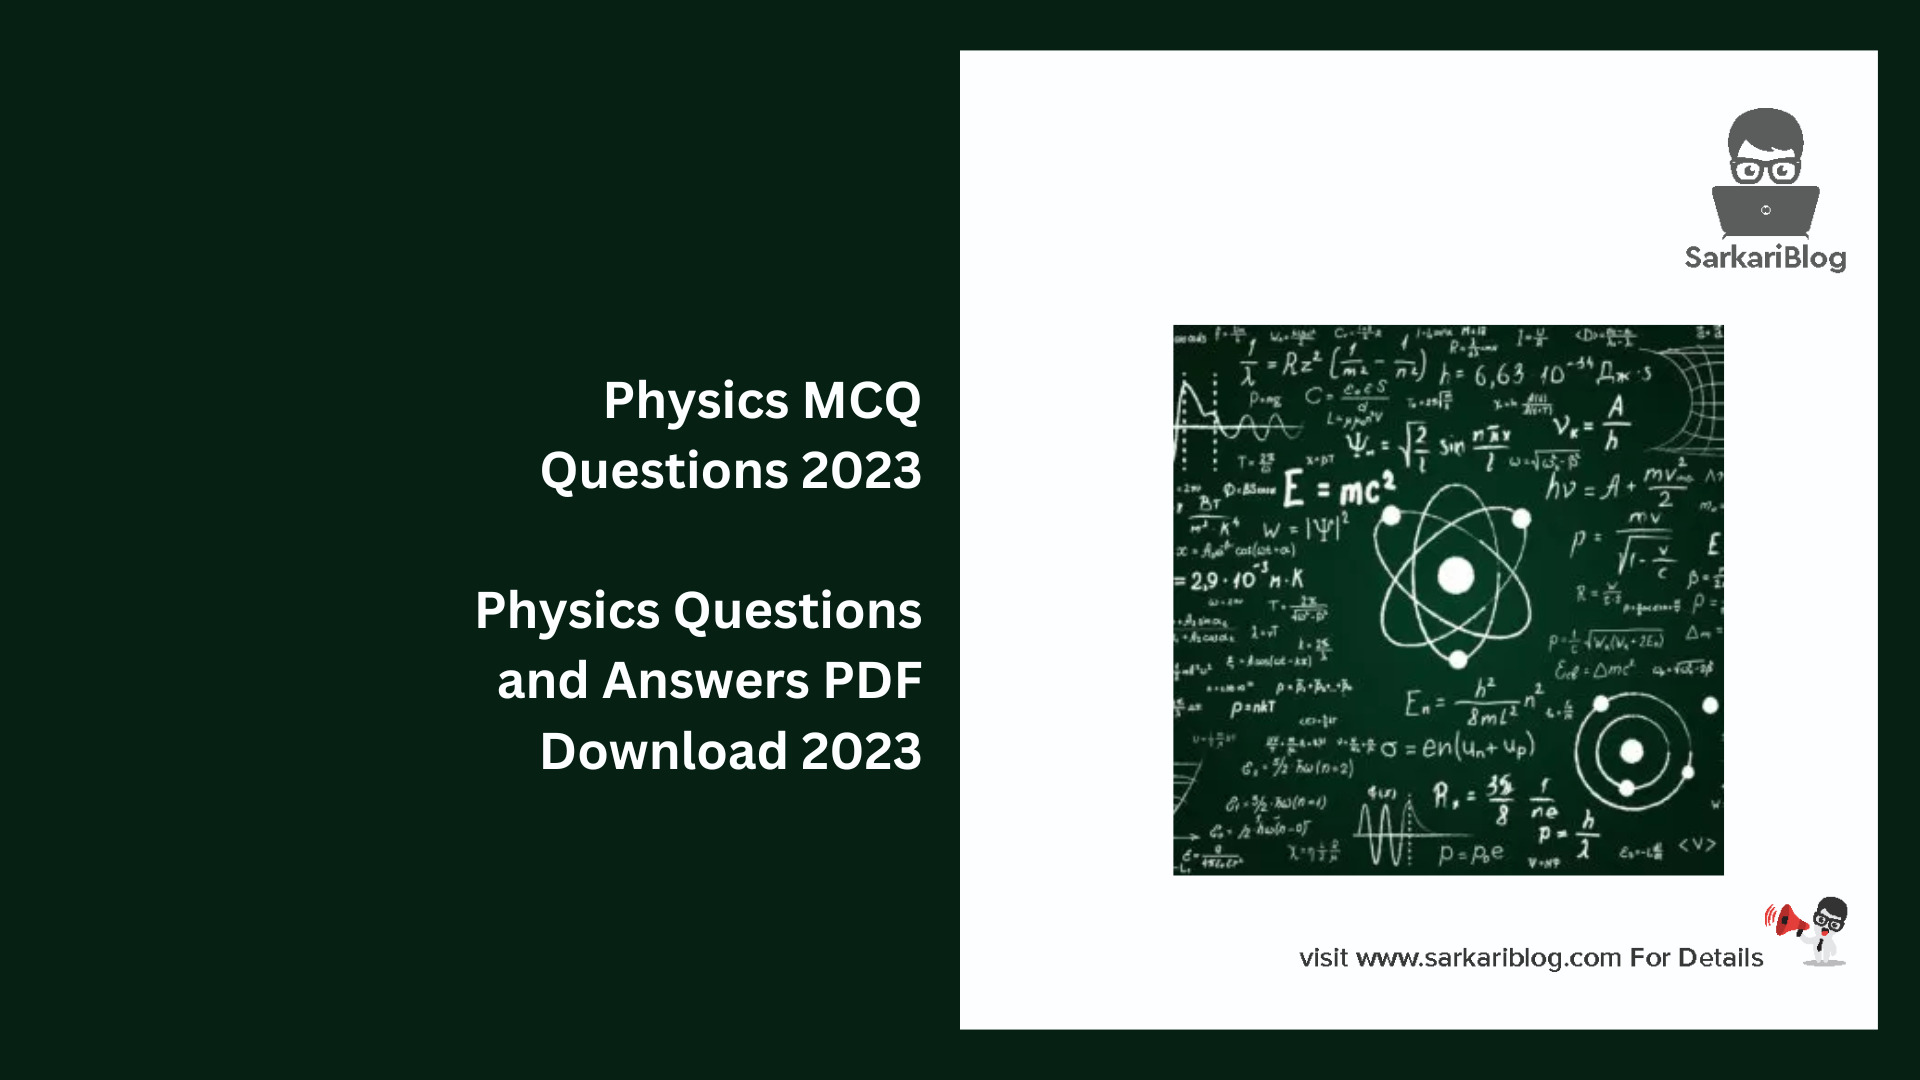 Physics MCQ Questions 2023